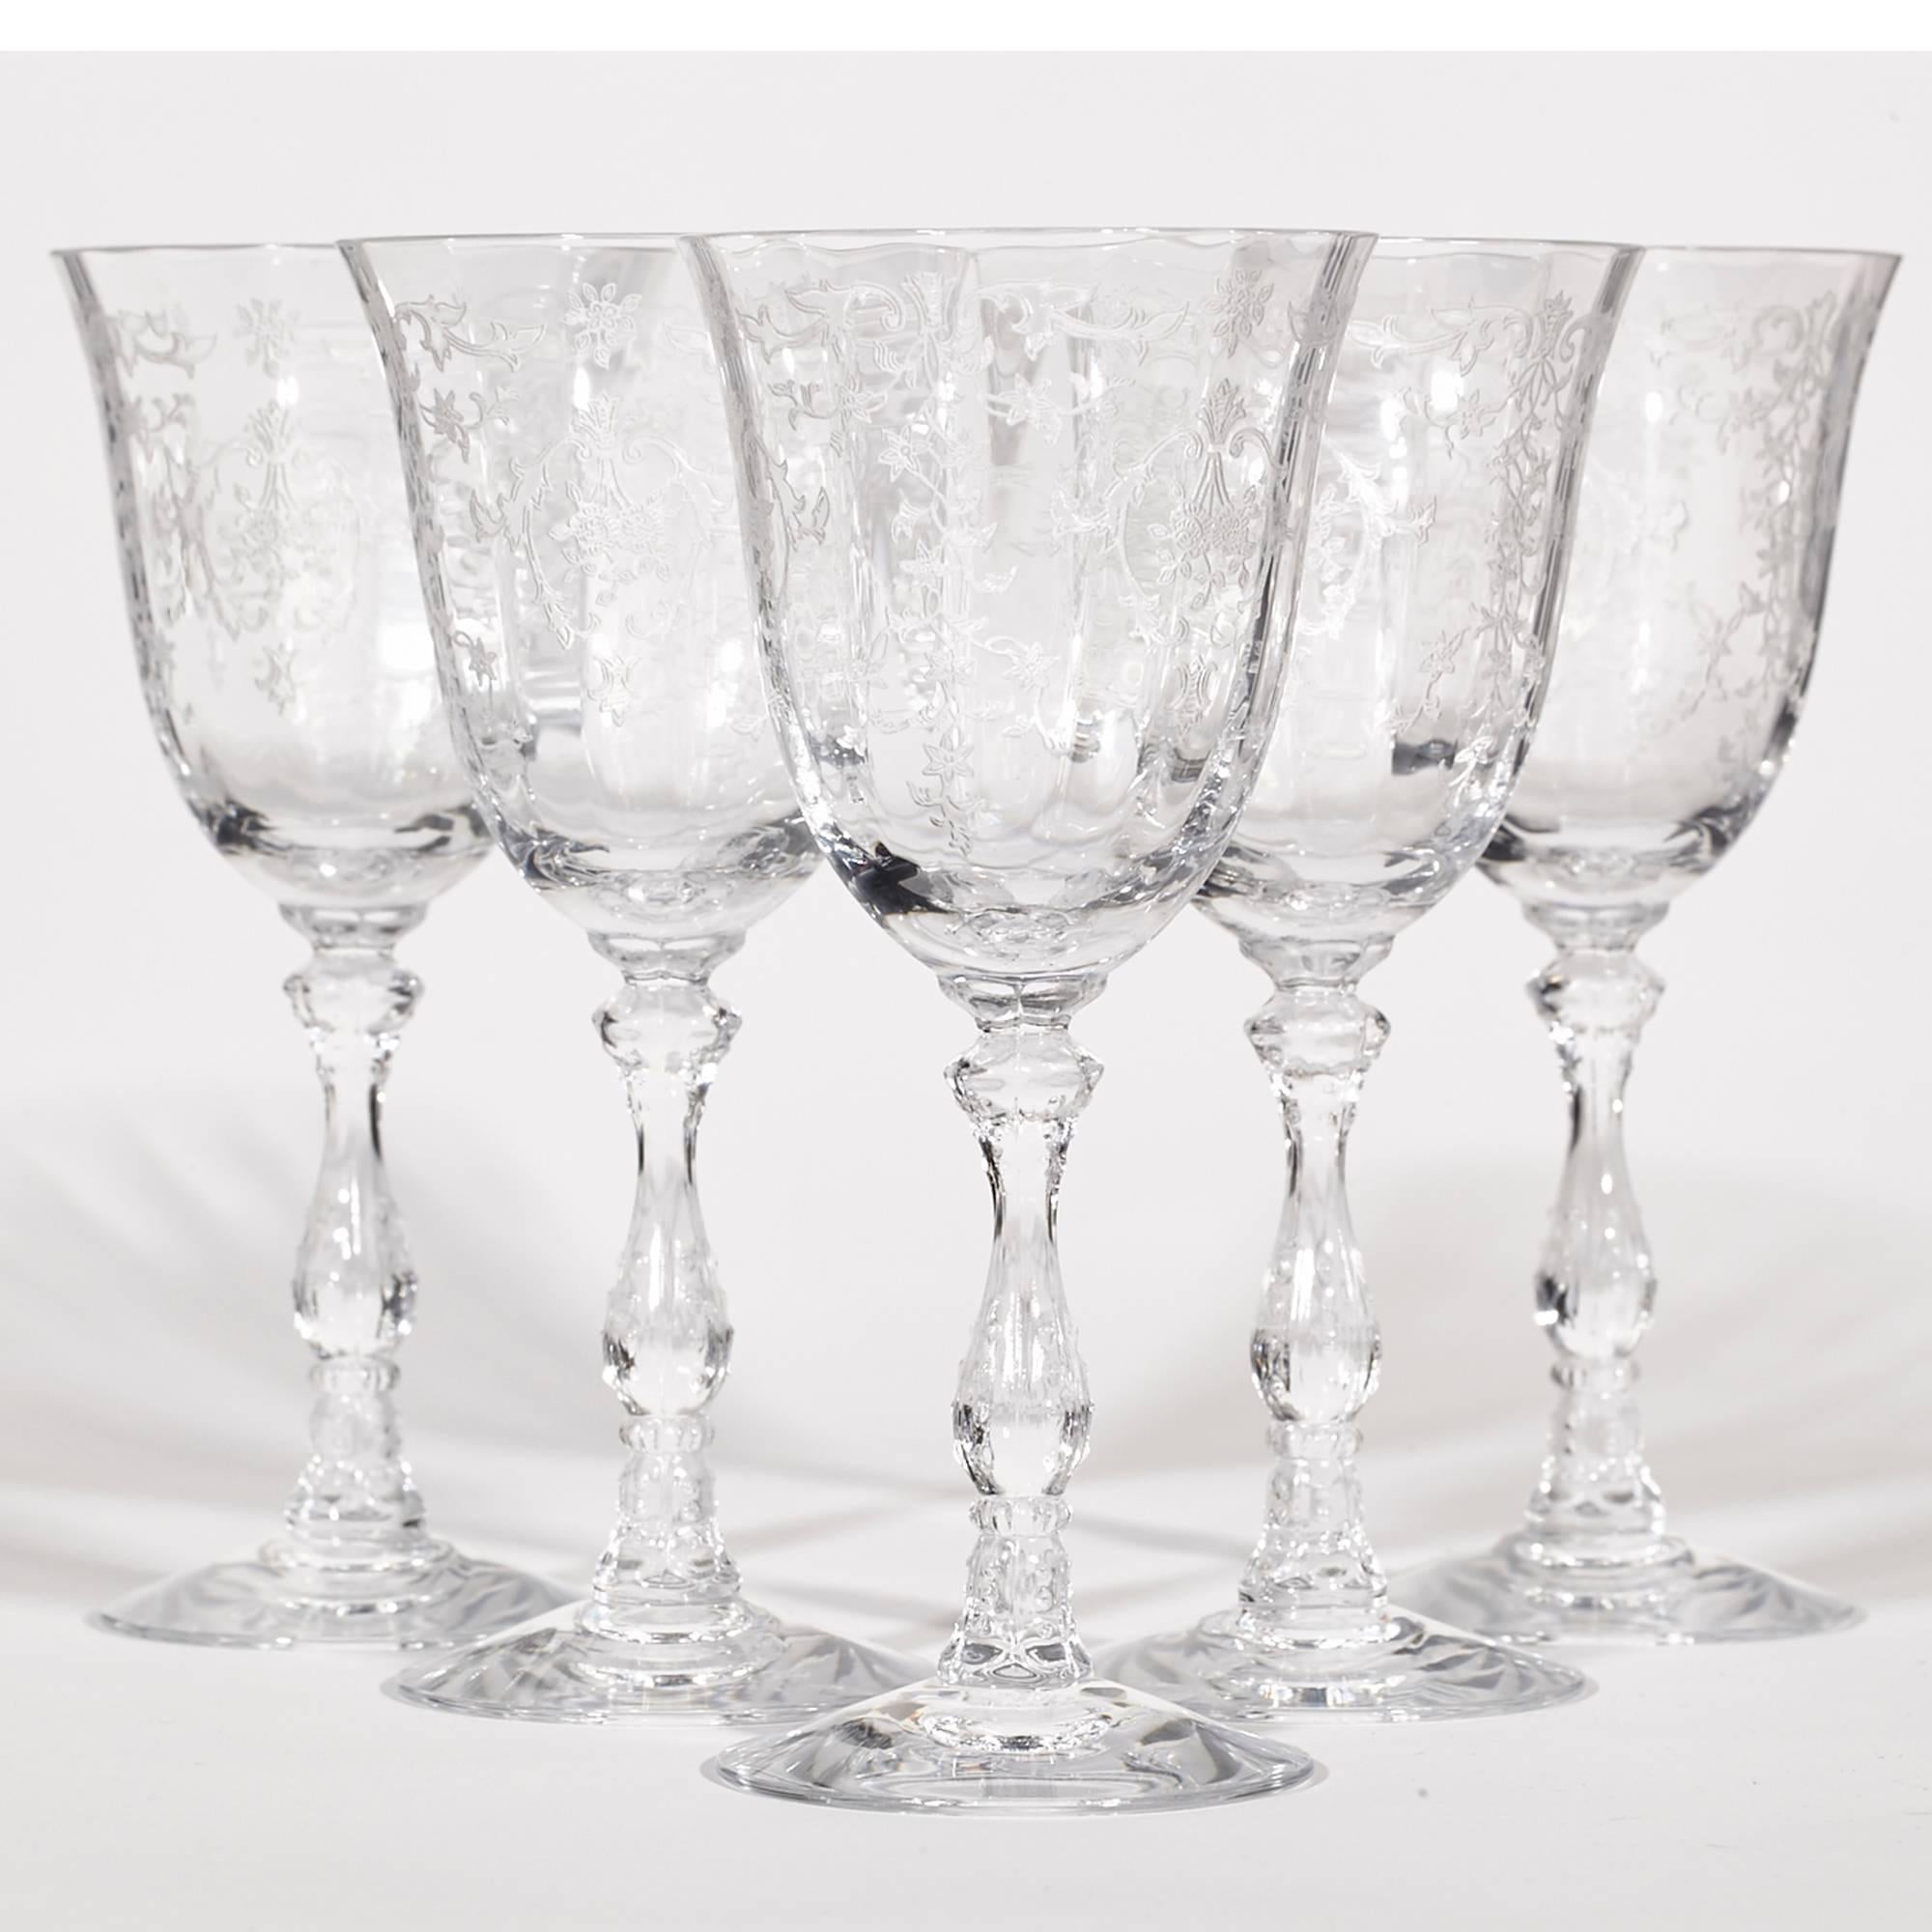 1950s glassware patterns